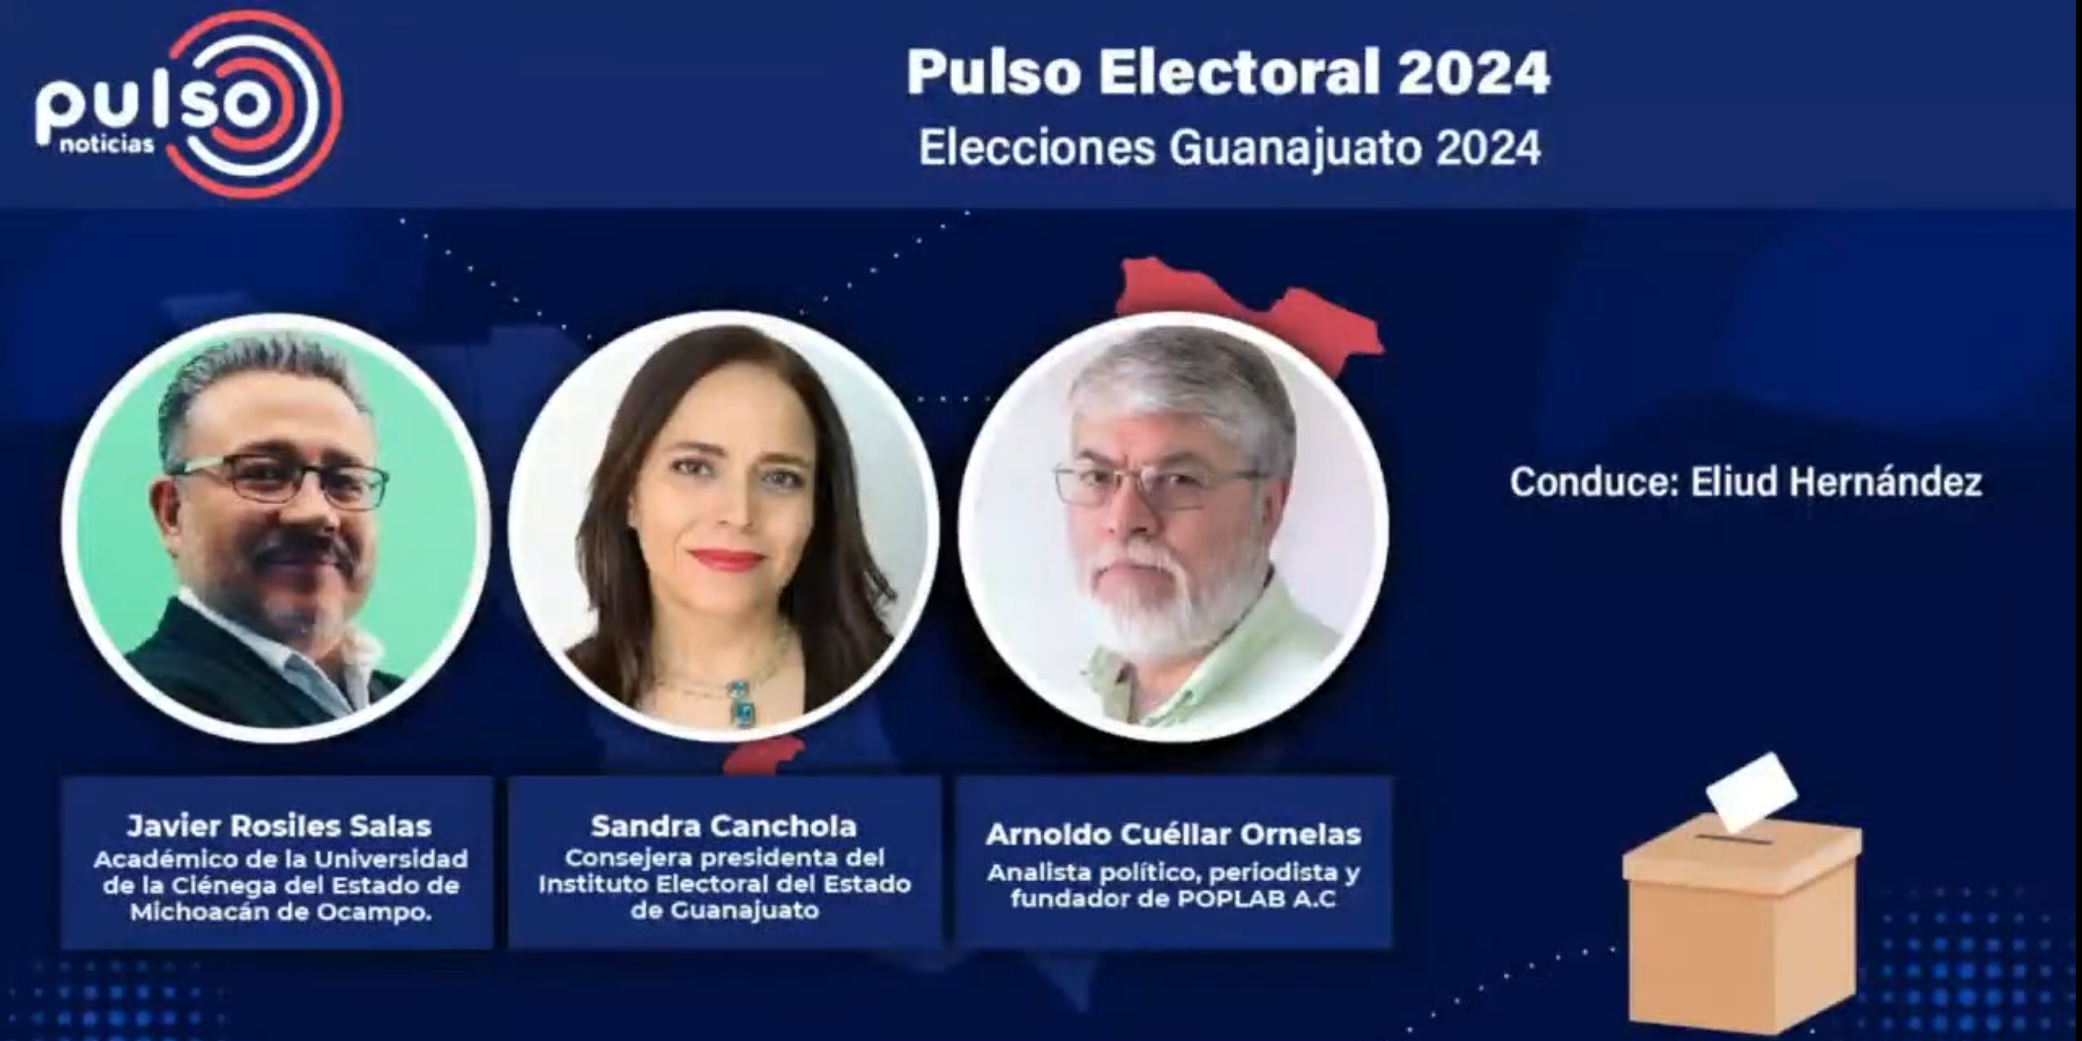 Pulso Electoral 2024: Elections in Guanajuato